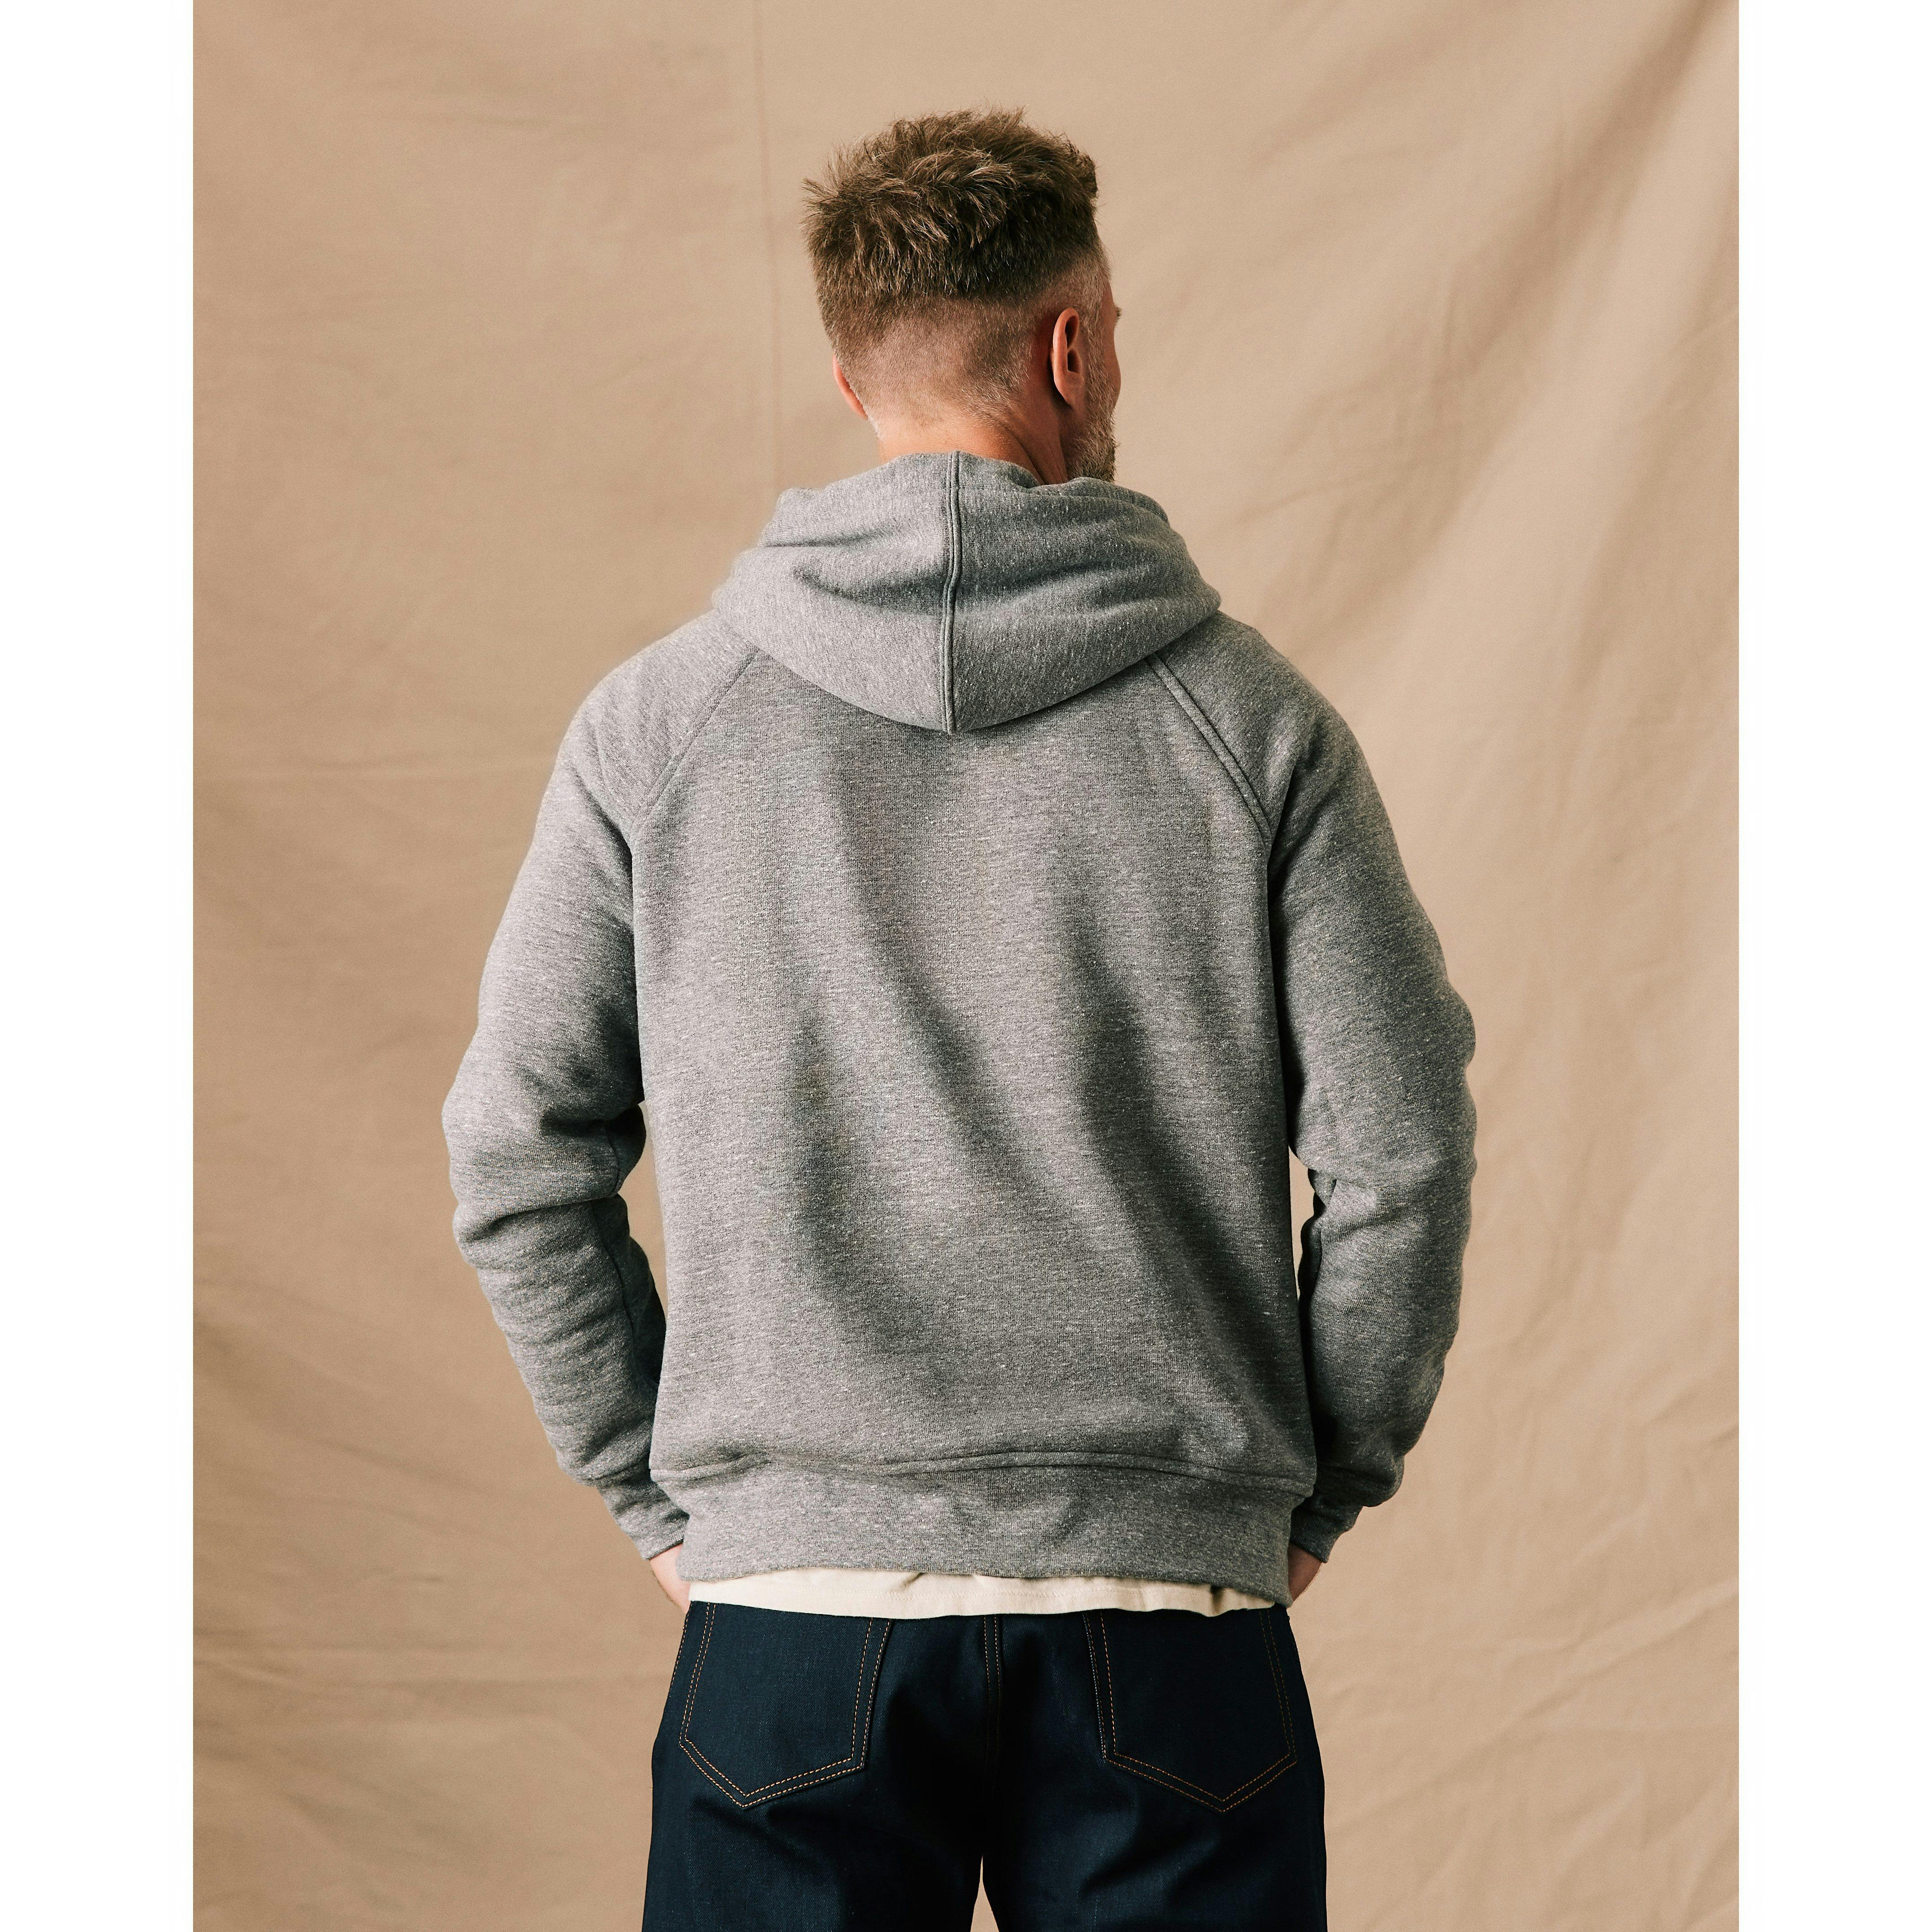 A Cold Wall Inside Out Hoodie Sweatshirt Grey Stitching Logo Seam